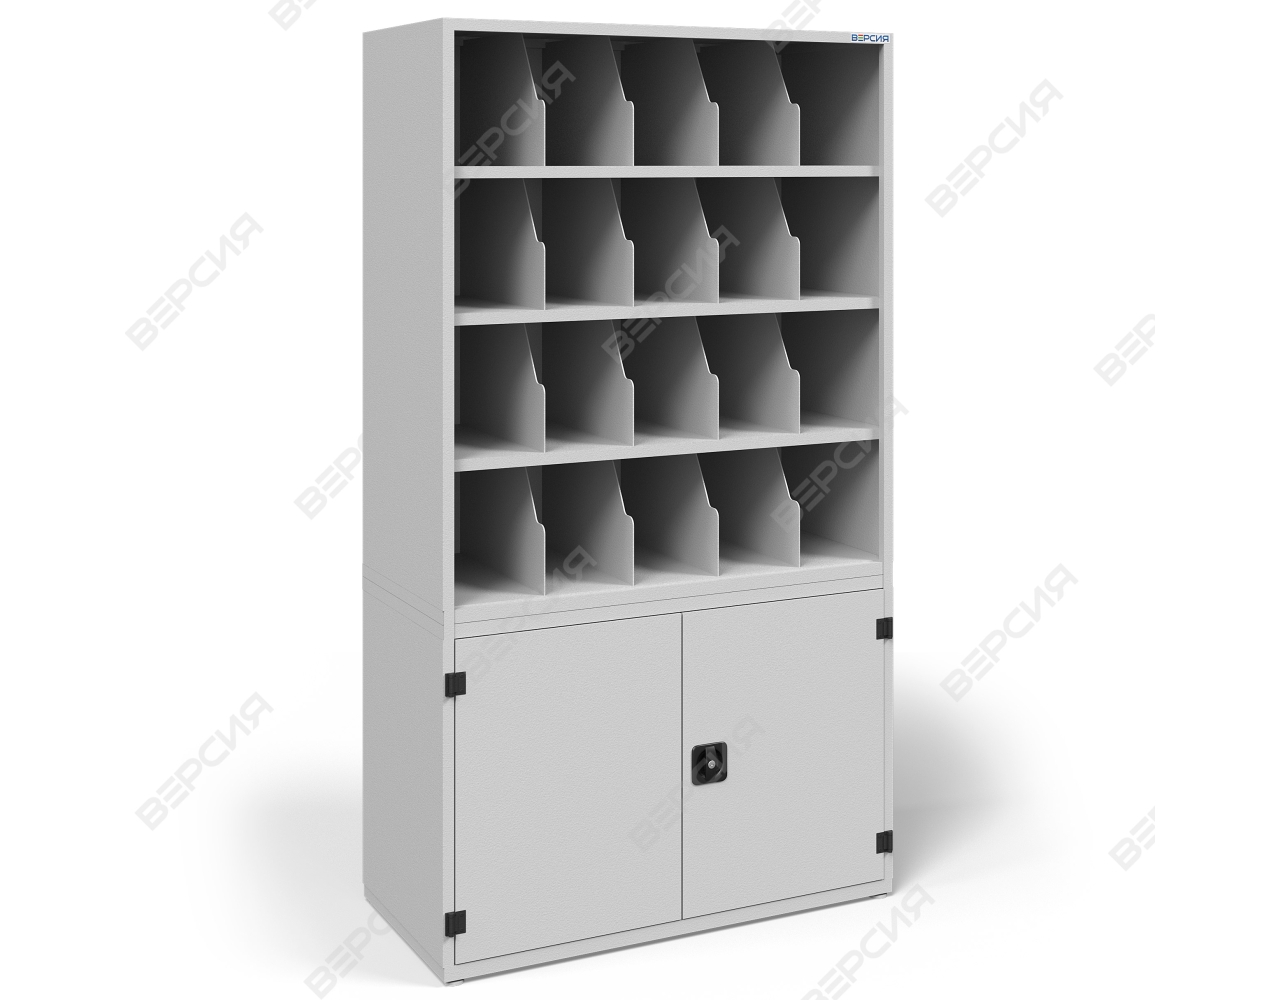 Шкафы для хранения противогазов в организации металлические на 20 ячеек 